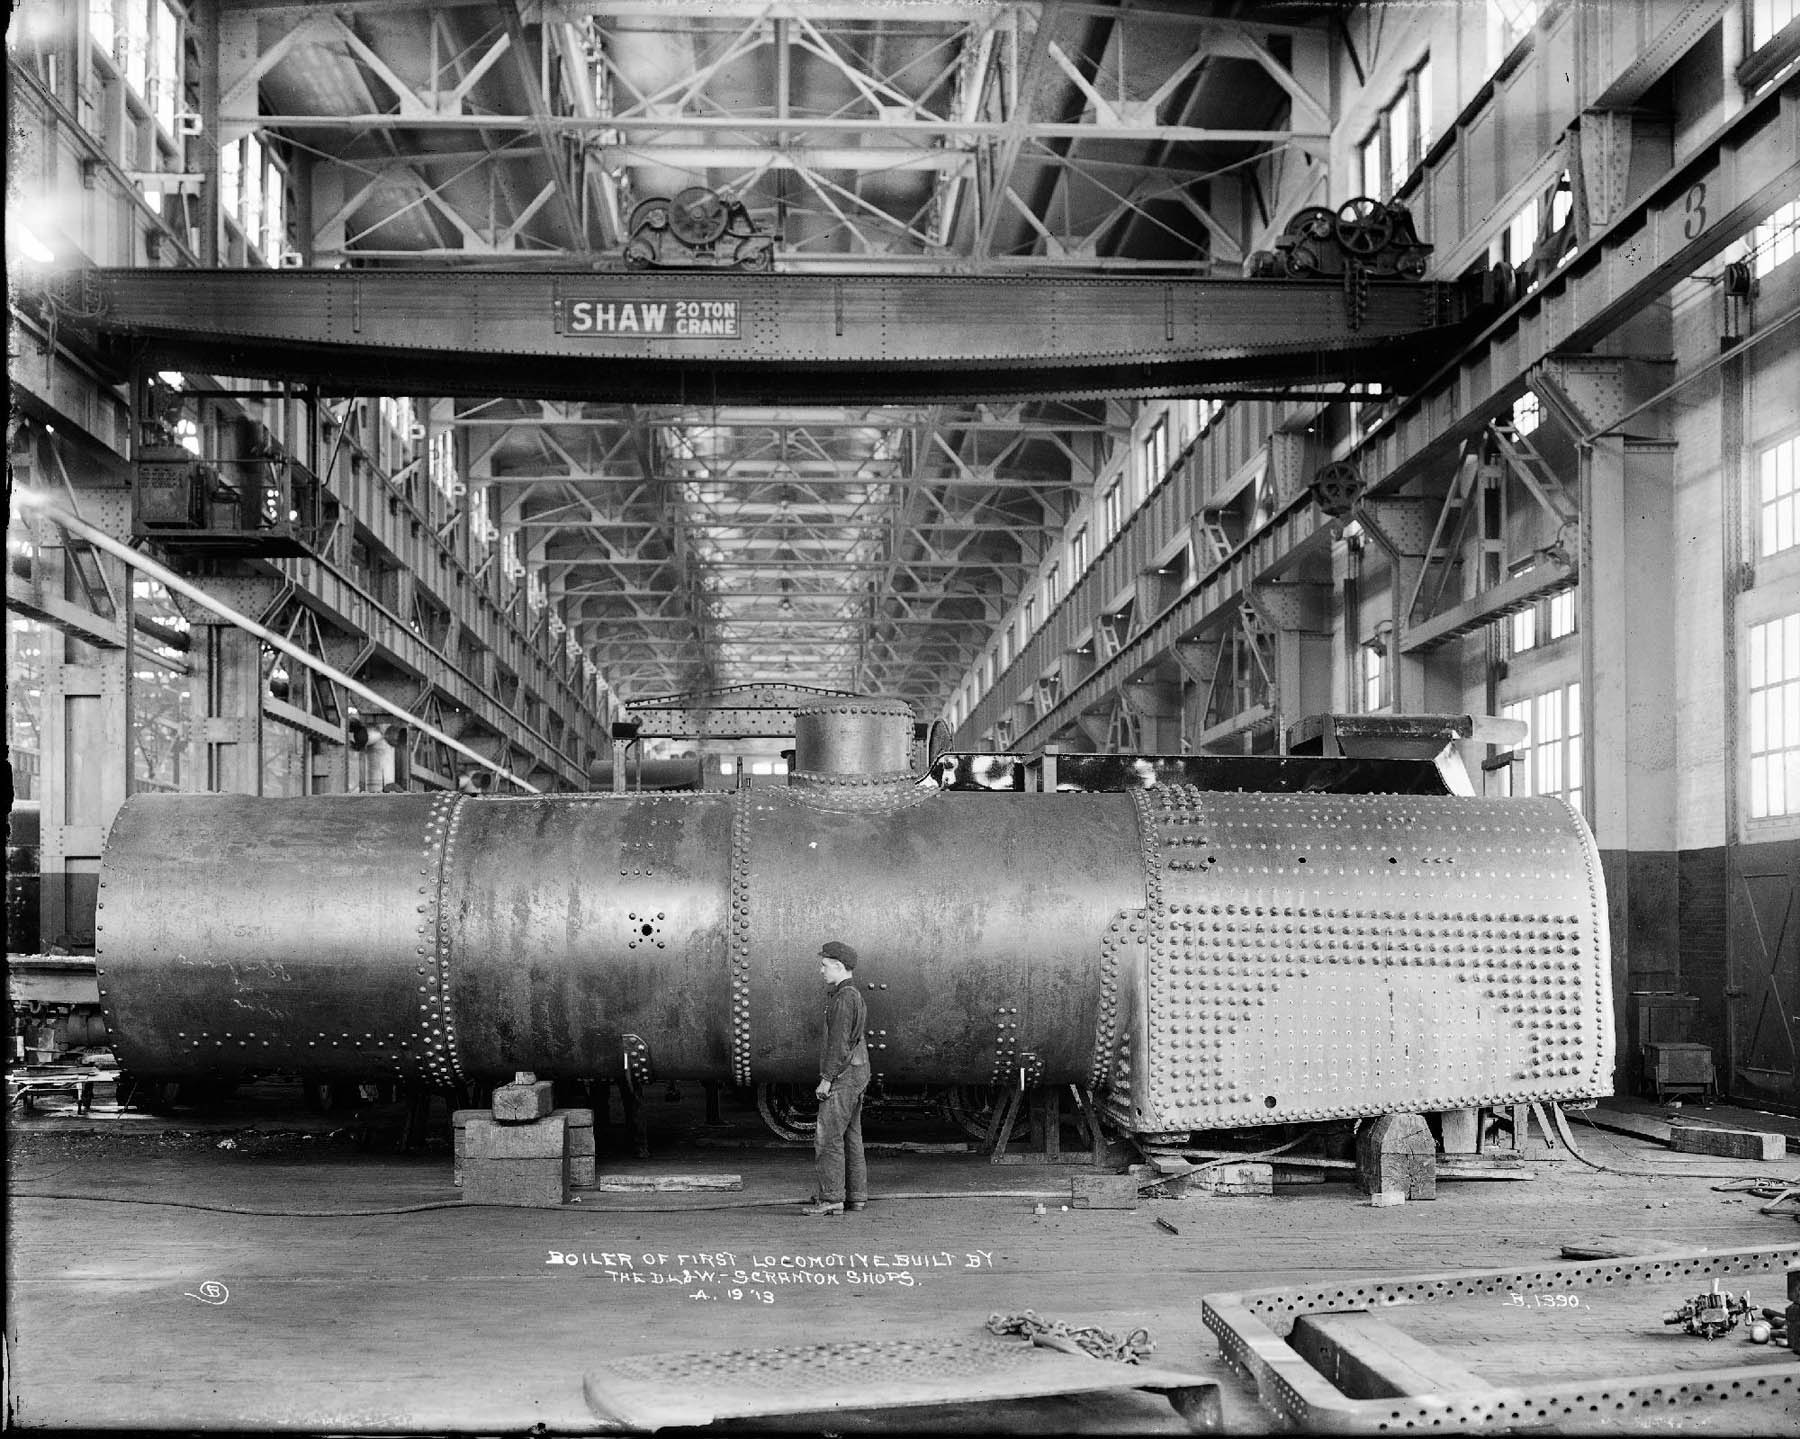 Boiler of first locomotive built by the D.L.&W. Scranton Shops
Scranton, PA 
